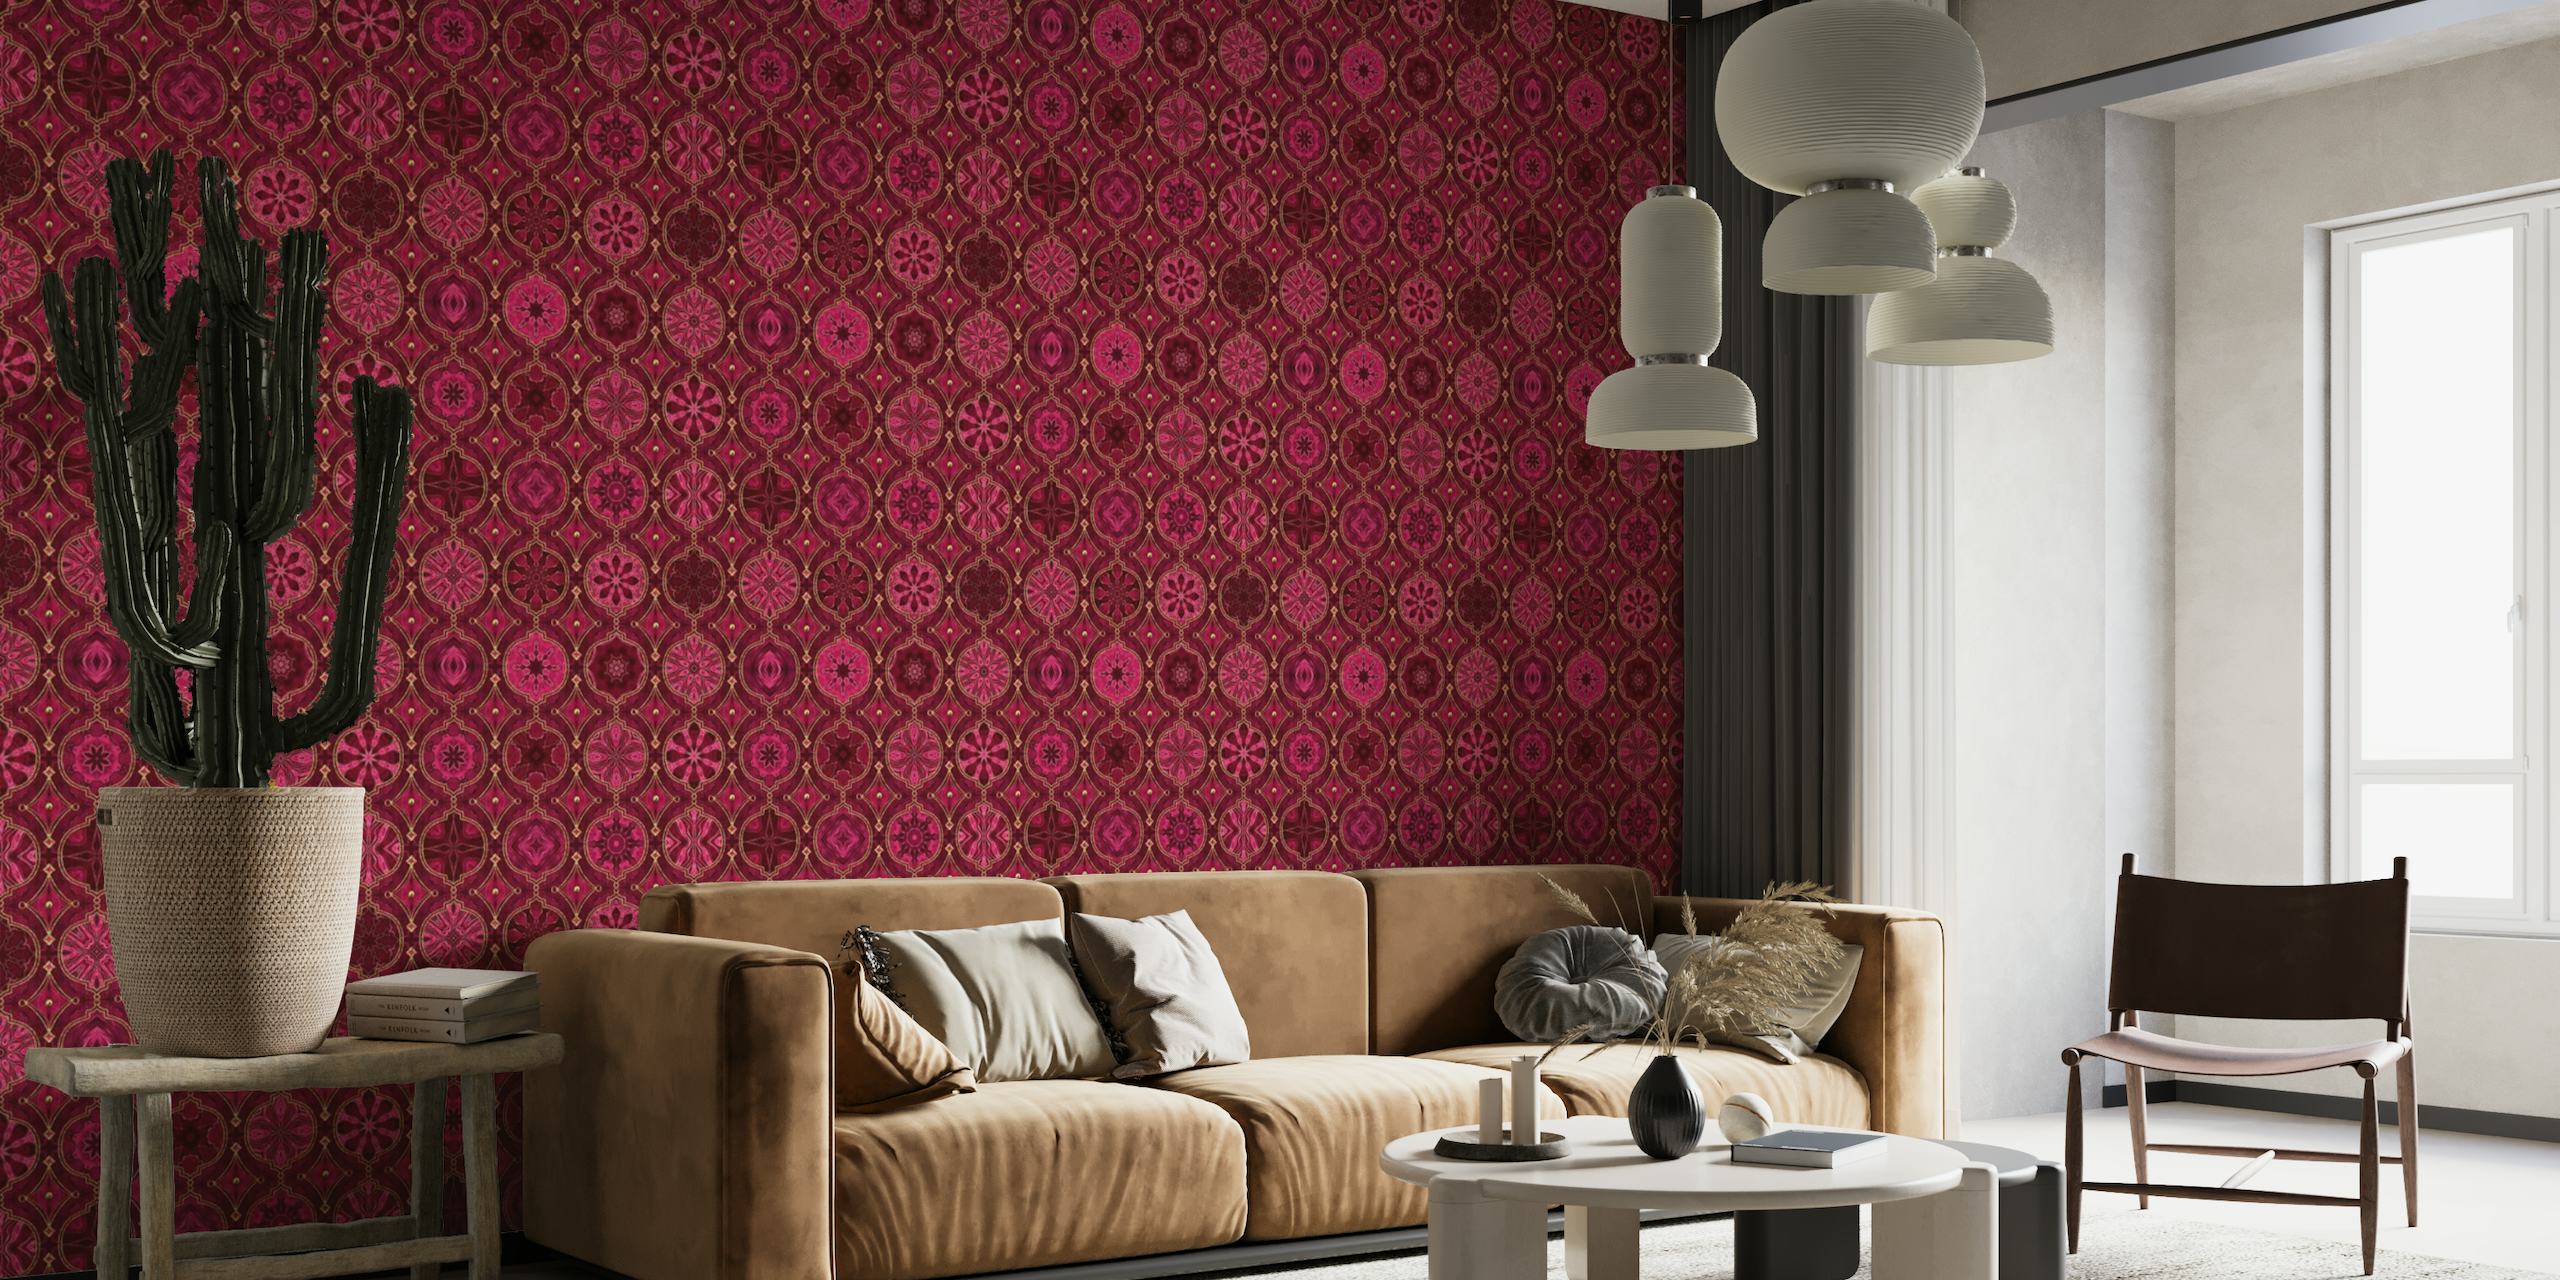 Treasures of Morocco Oriental Tile Design Burgundy Pink Gold wallpaper